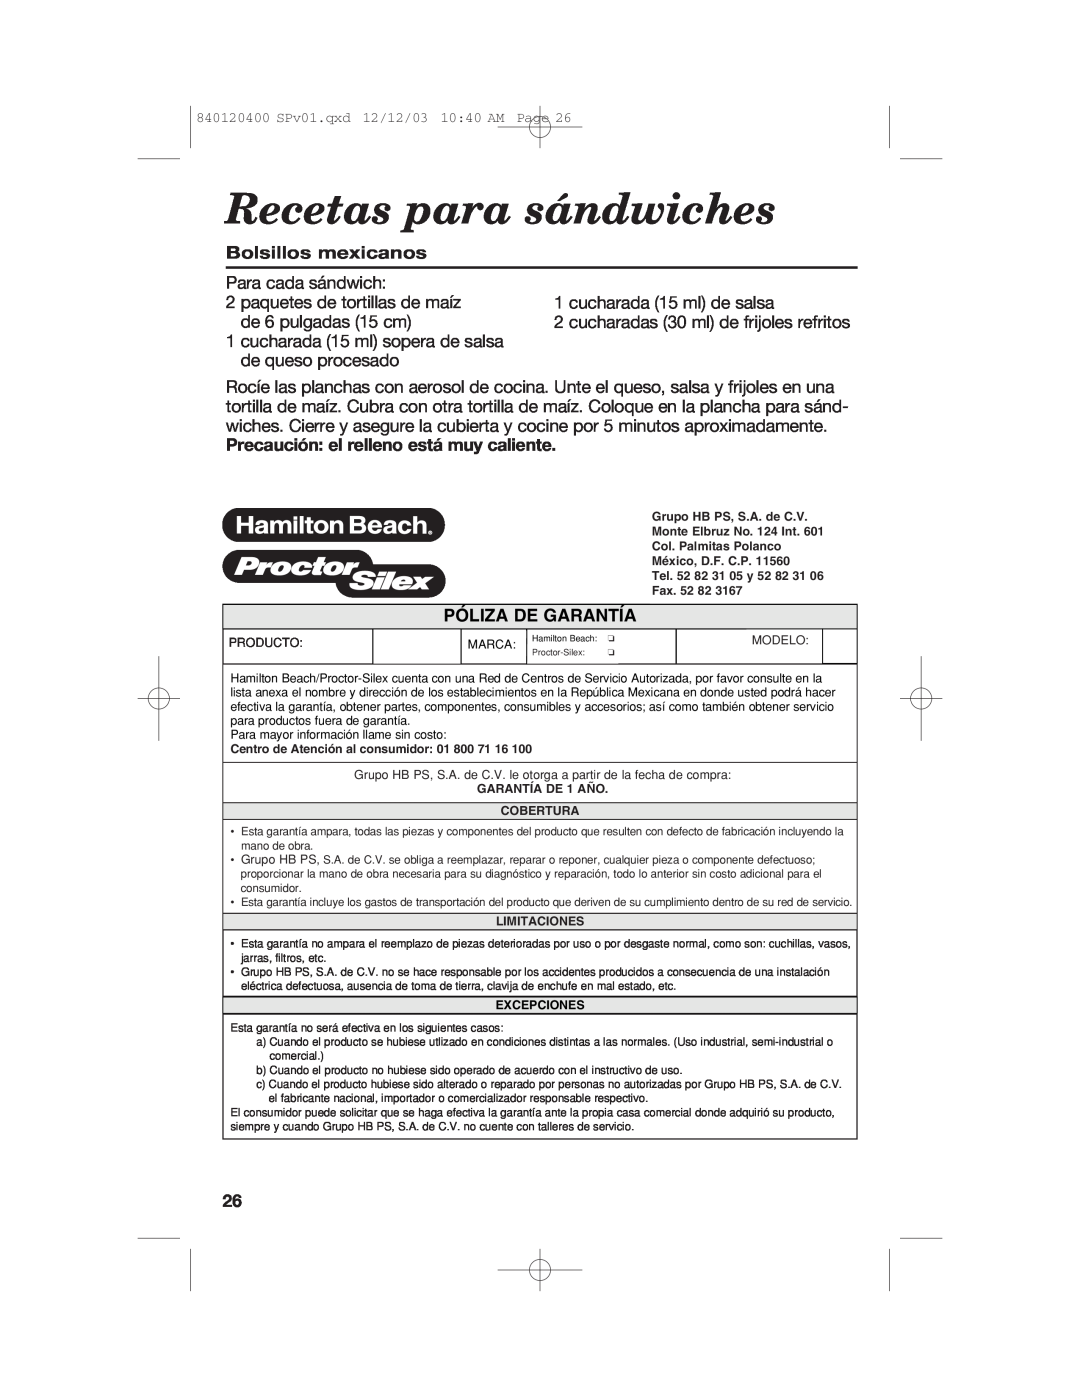 Hamilton Beach 26291 manual Recetas para sándwiches, Bolsillos mexicanos, Precaución el relleno está muy caliente, Fax 